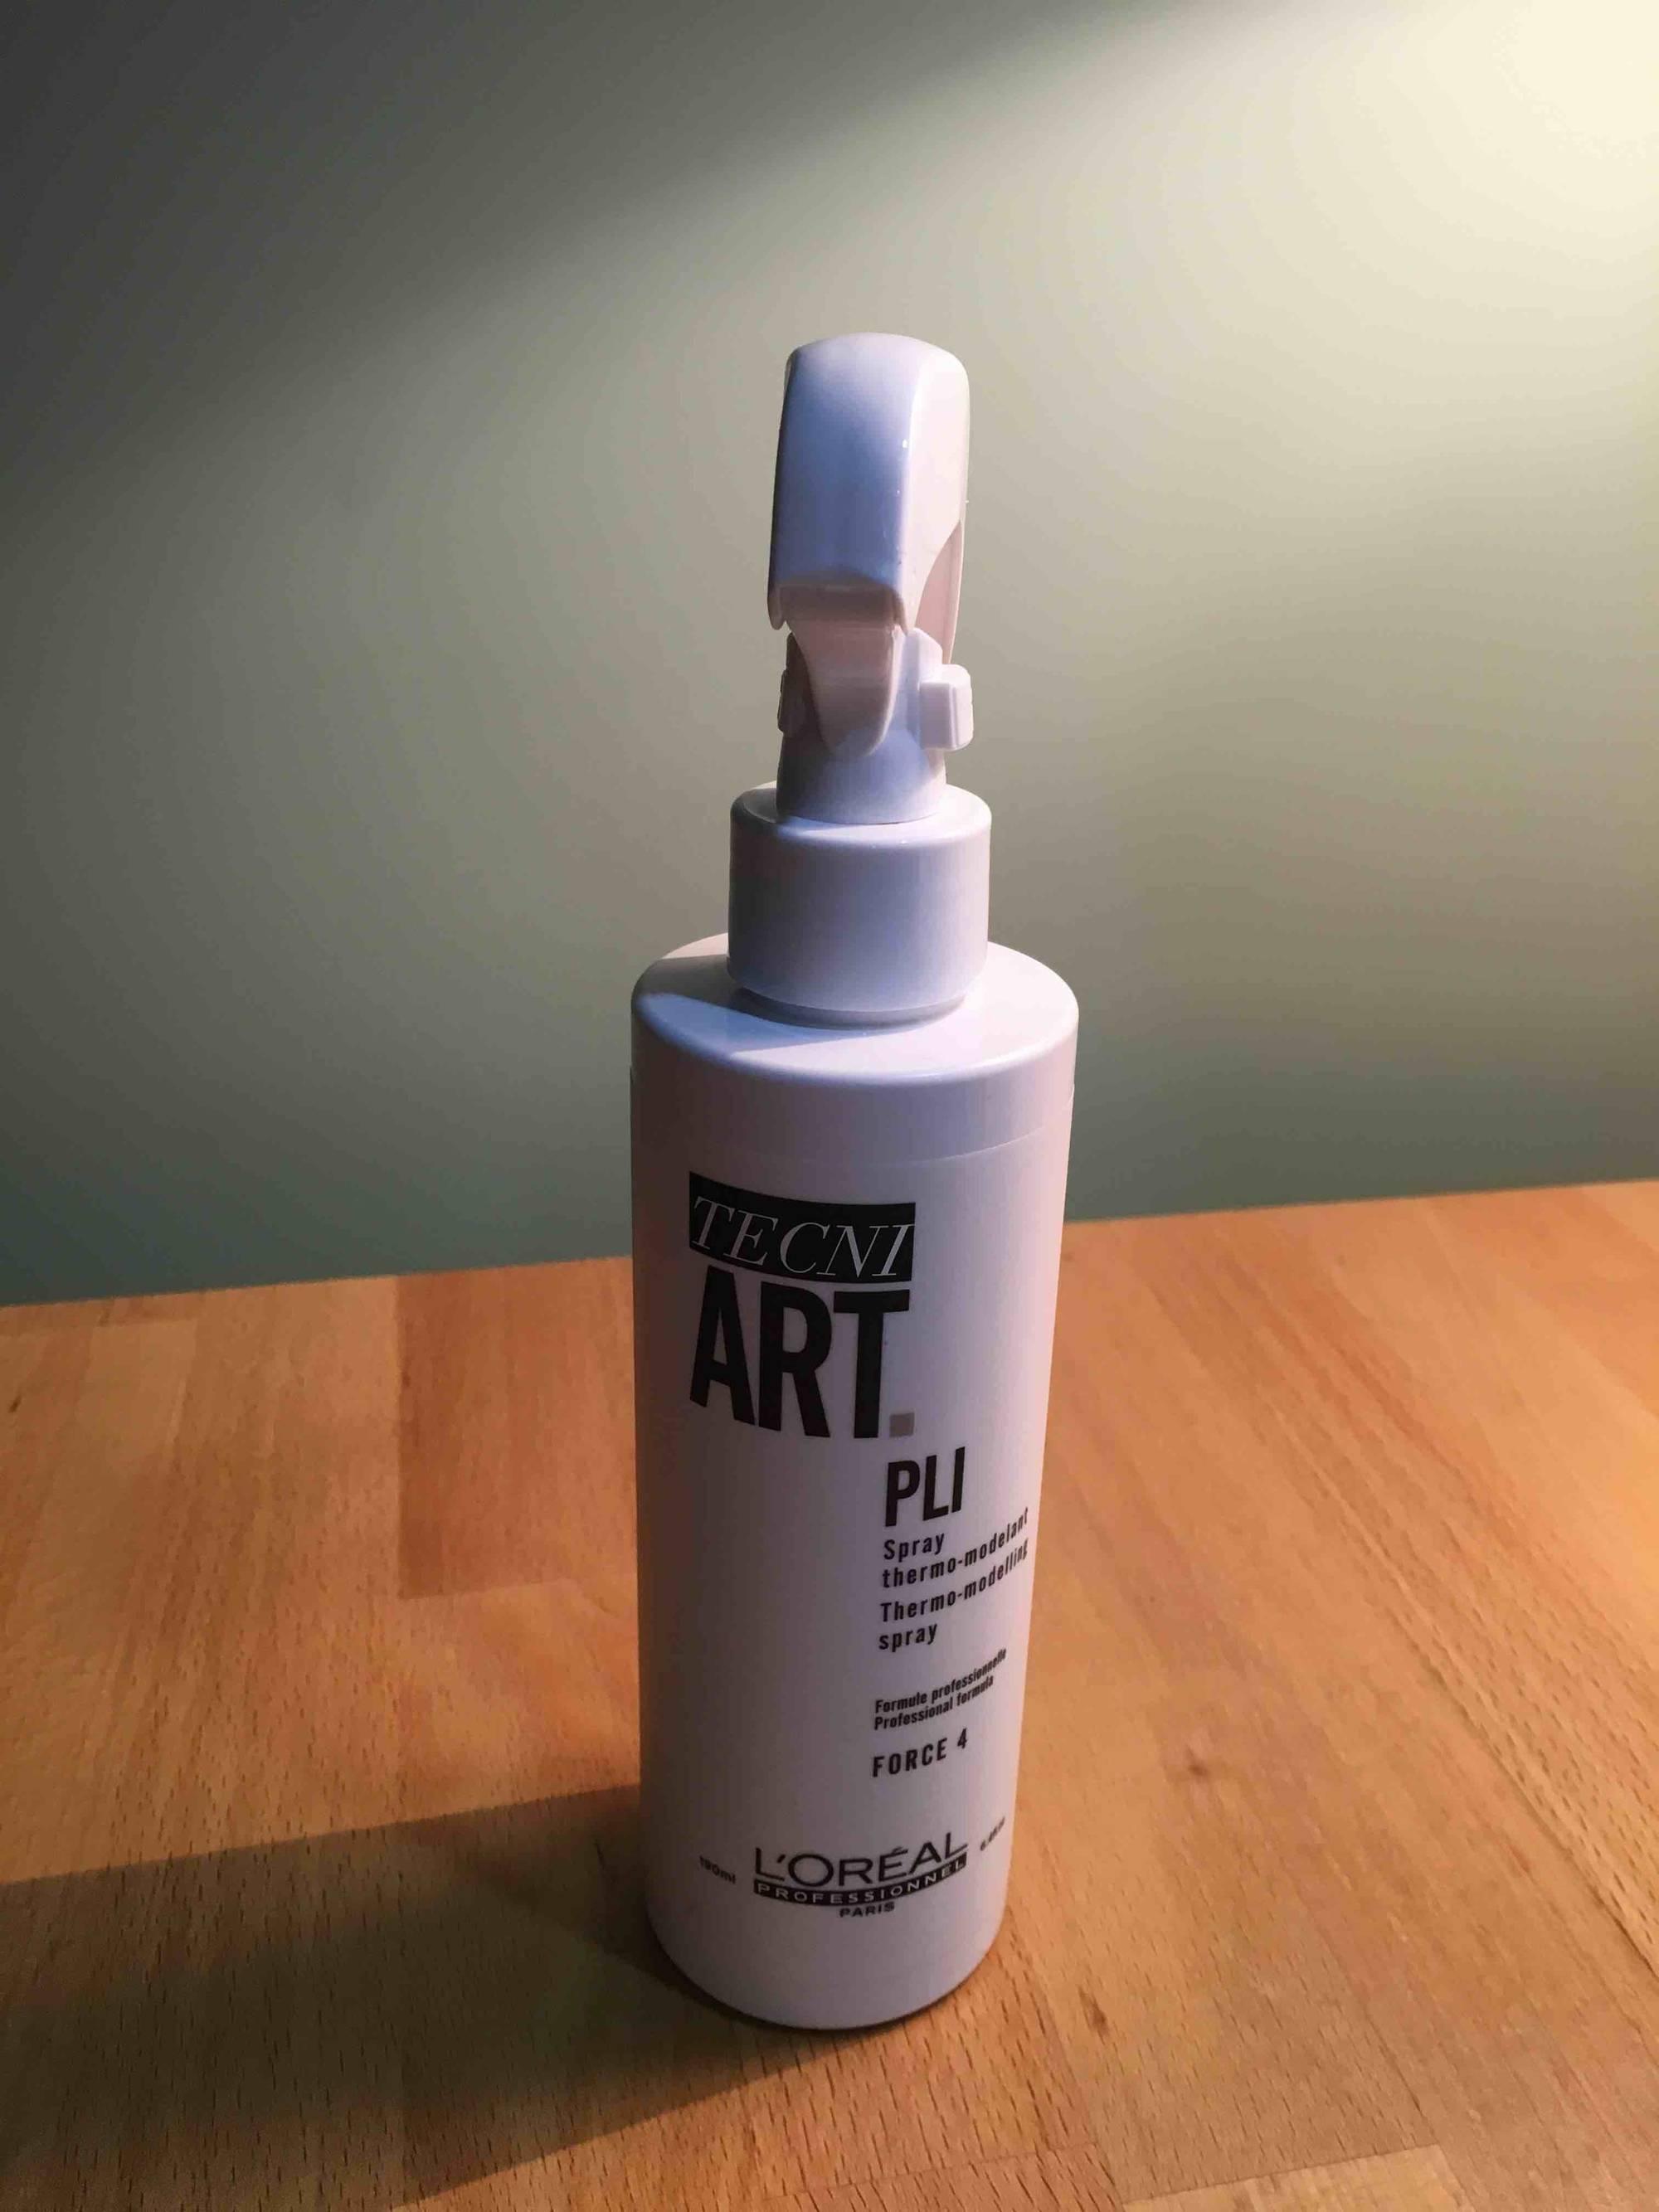 L'ORÉAL PROFESSIONNEL - Tecni art pli - Spray thermo-modelant